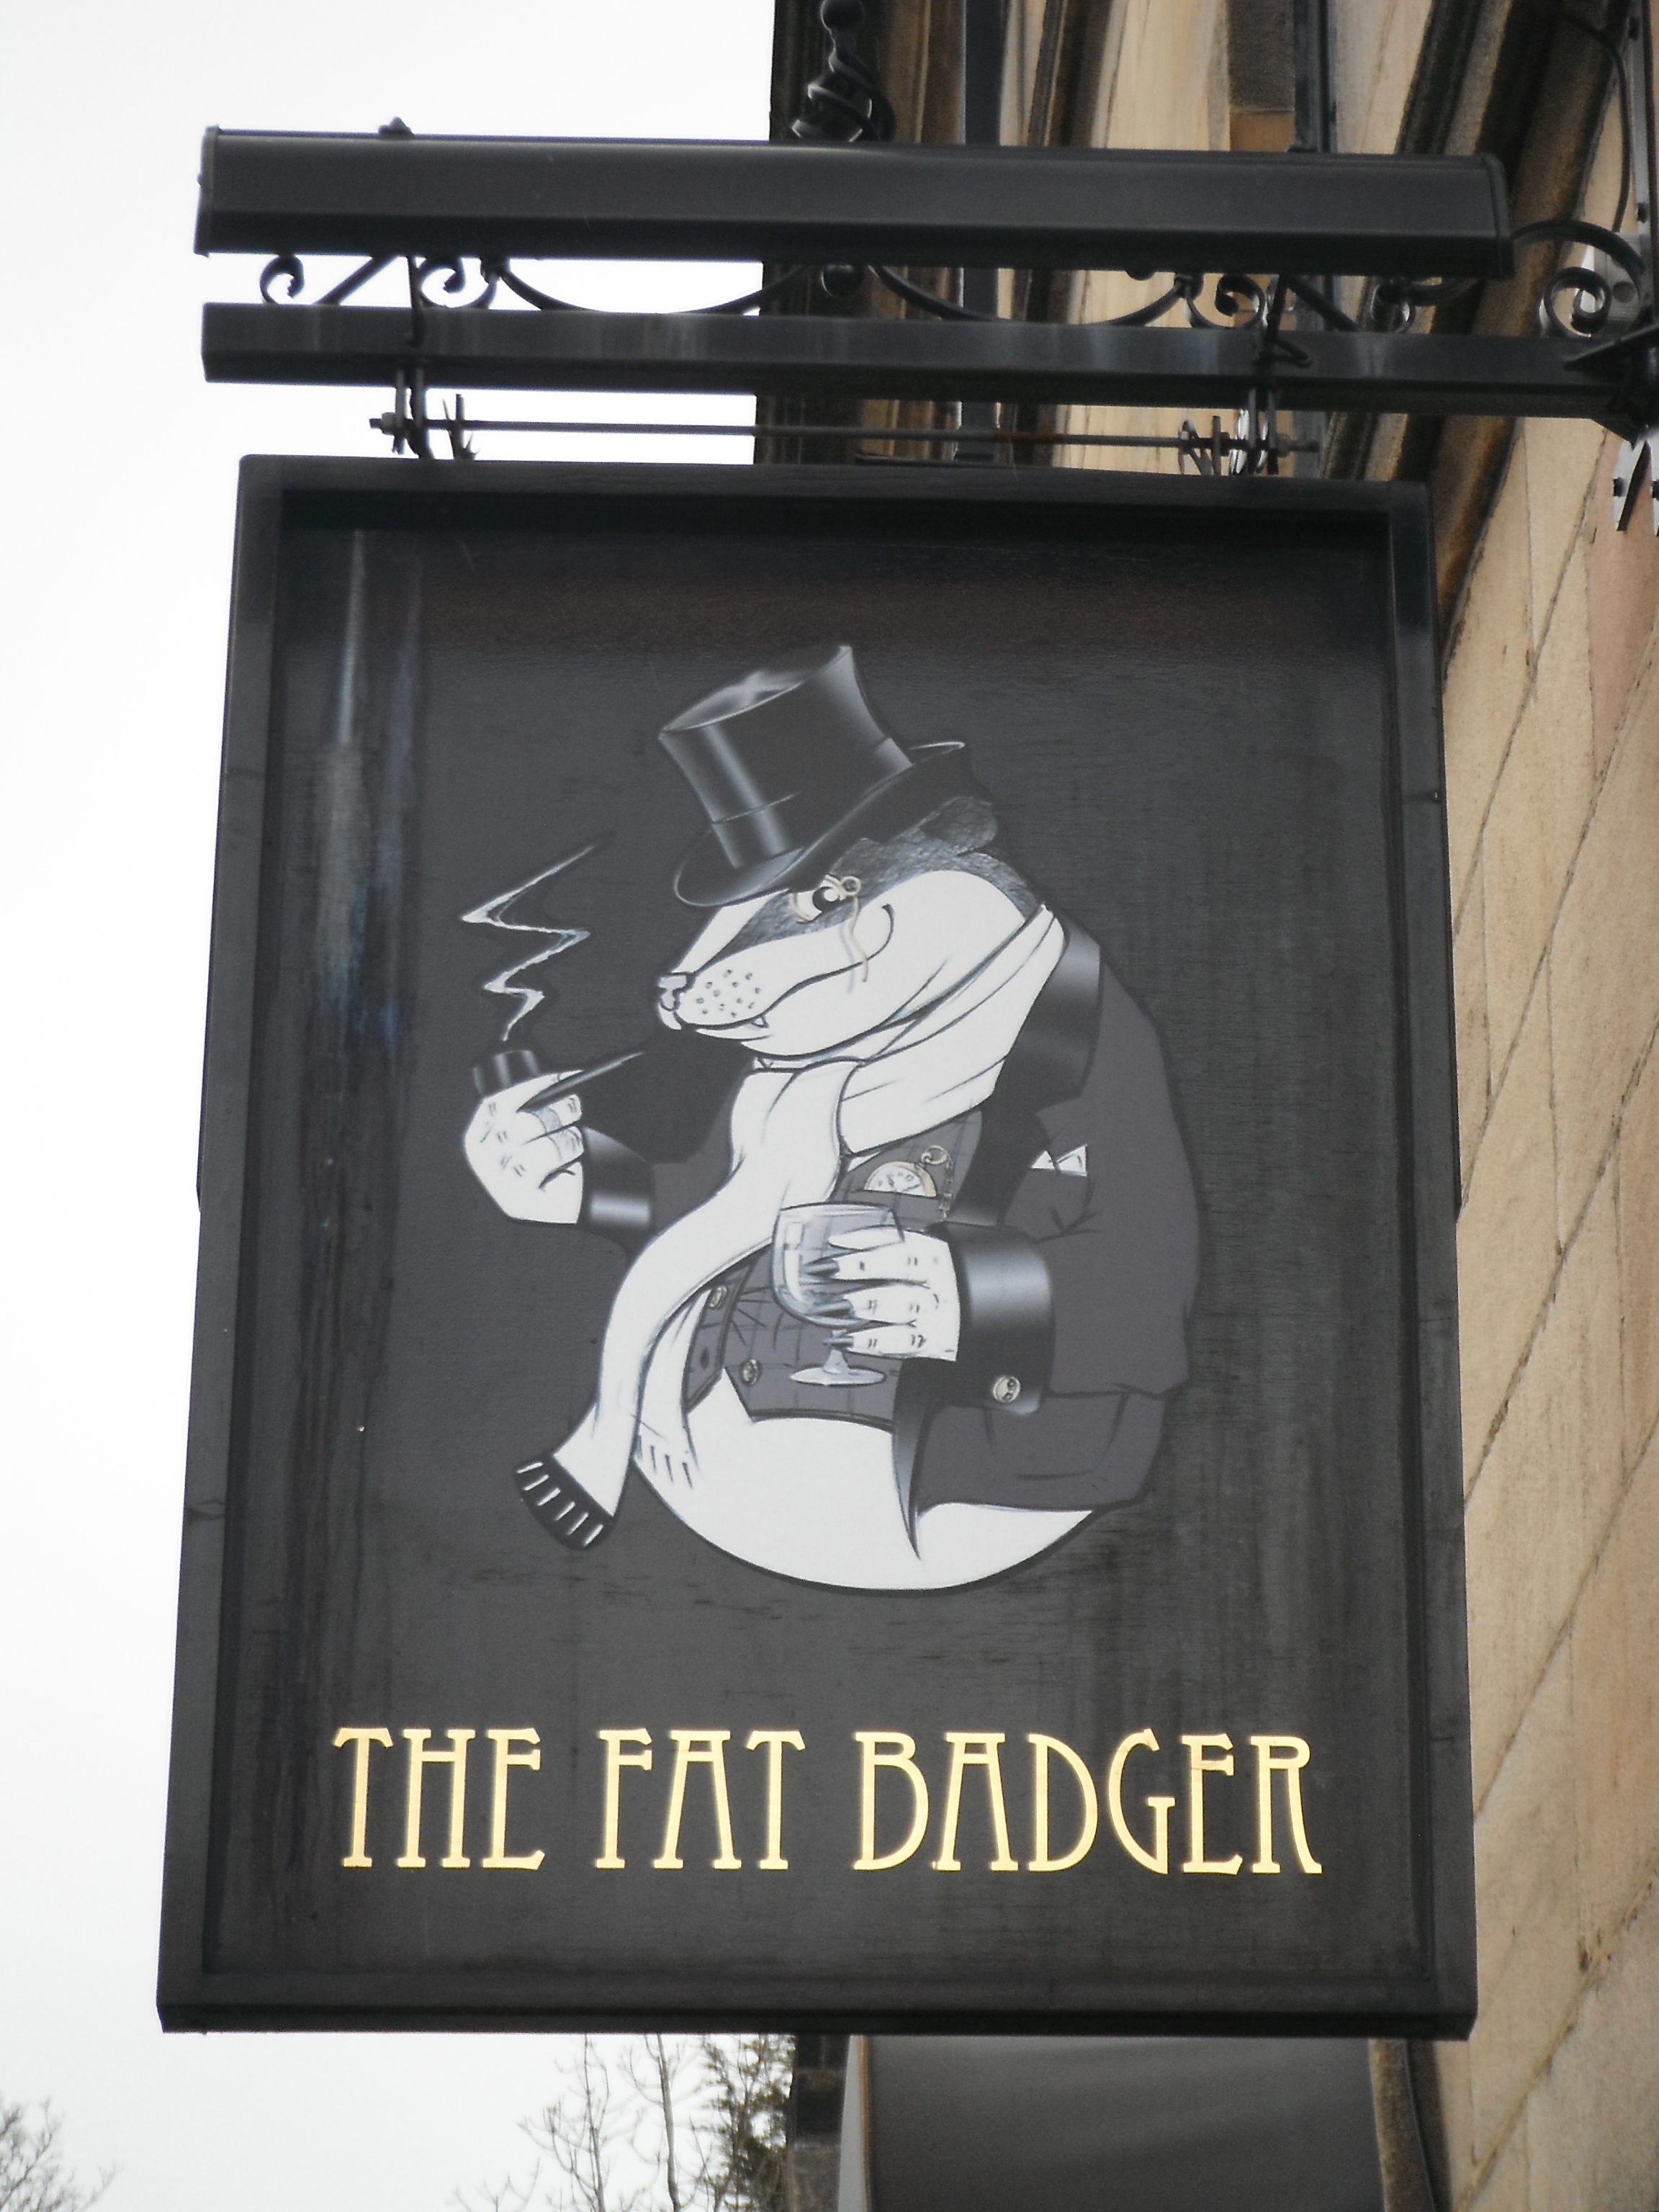 Photo taken by me – The Fat Badger Bar, Harrogate